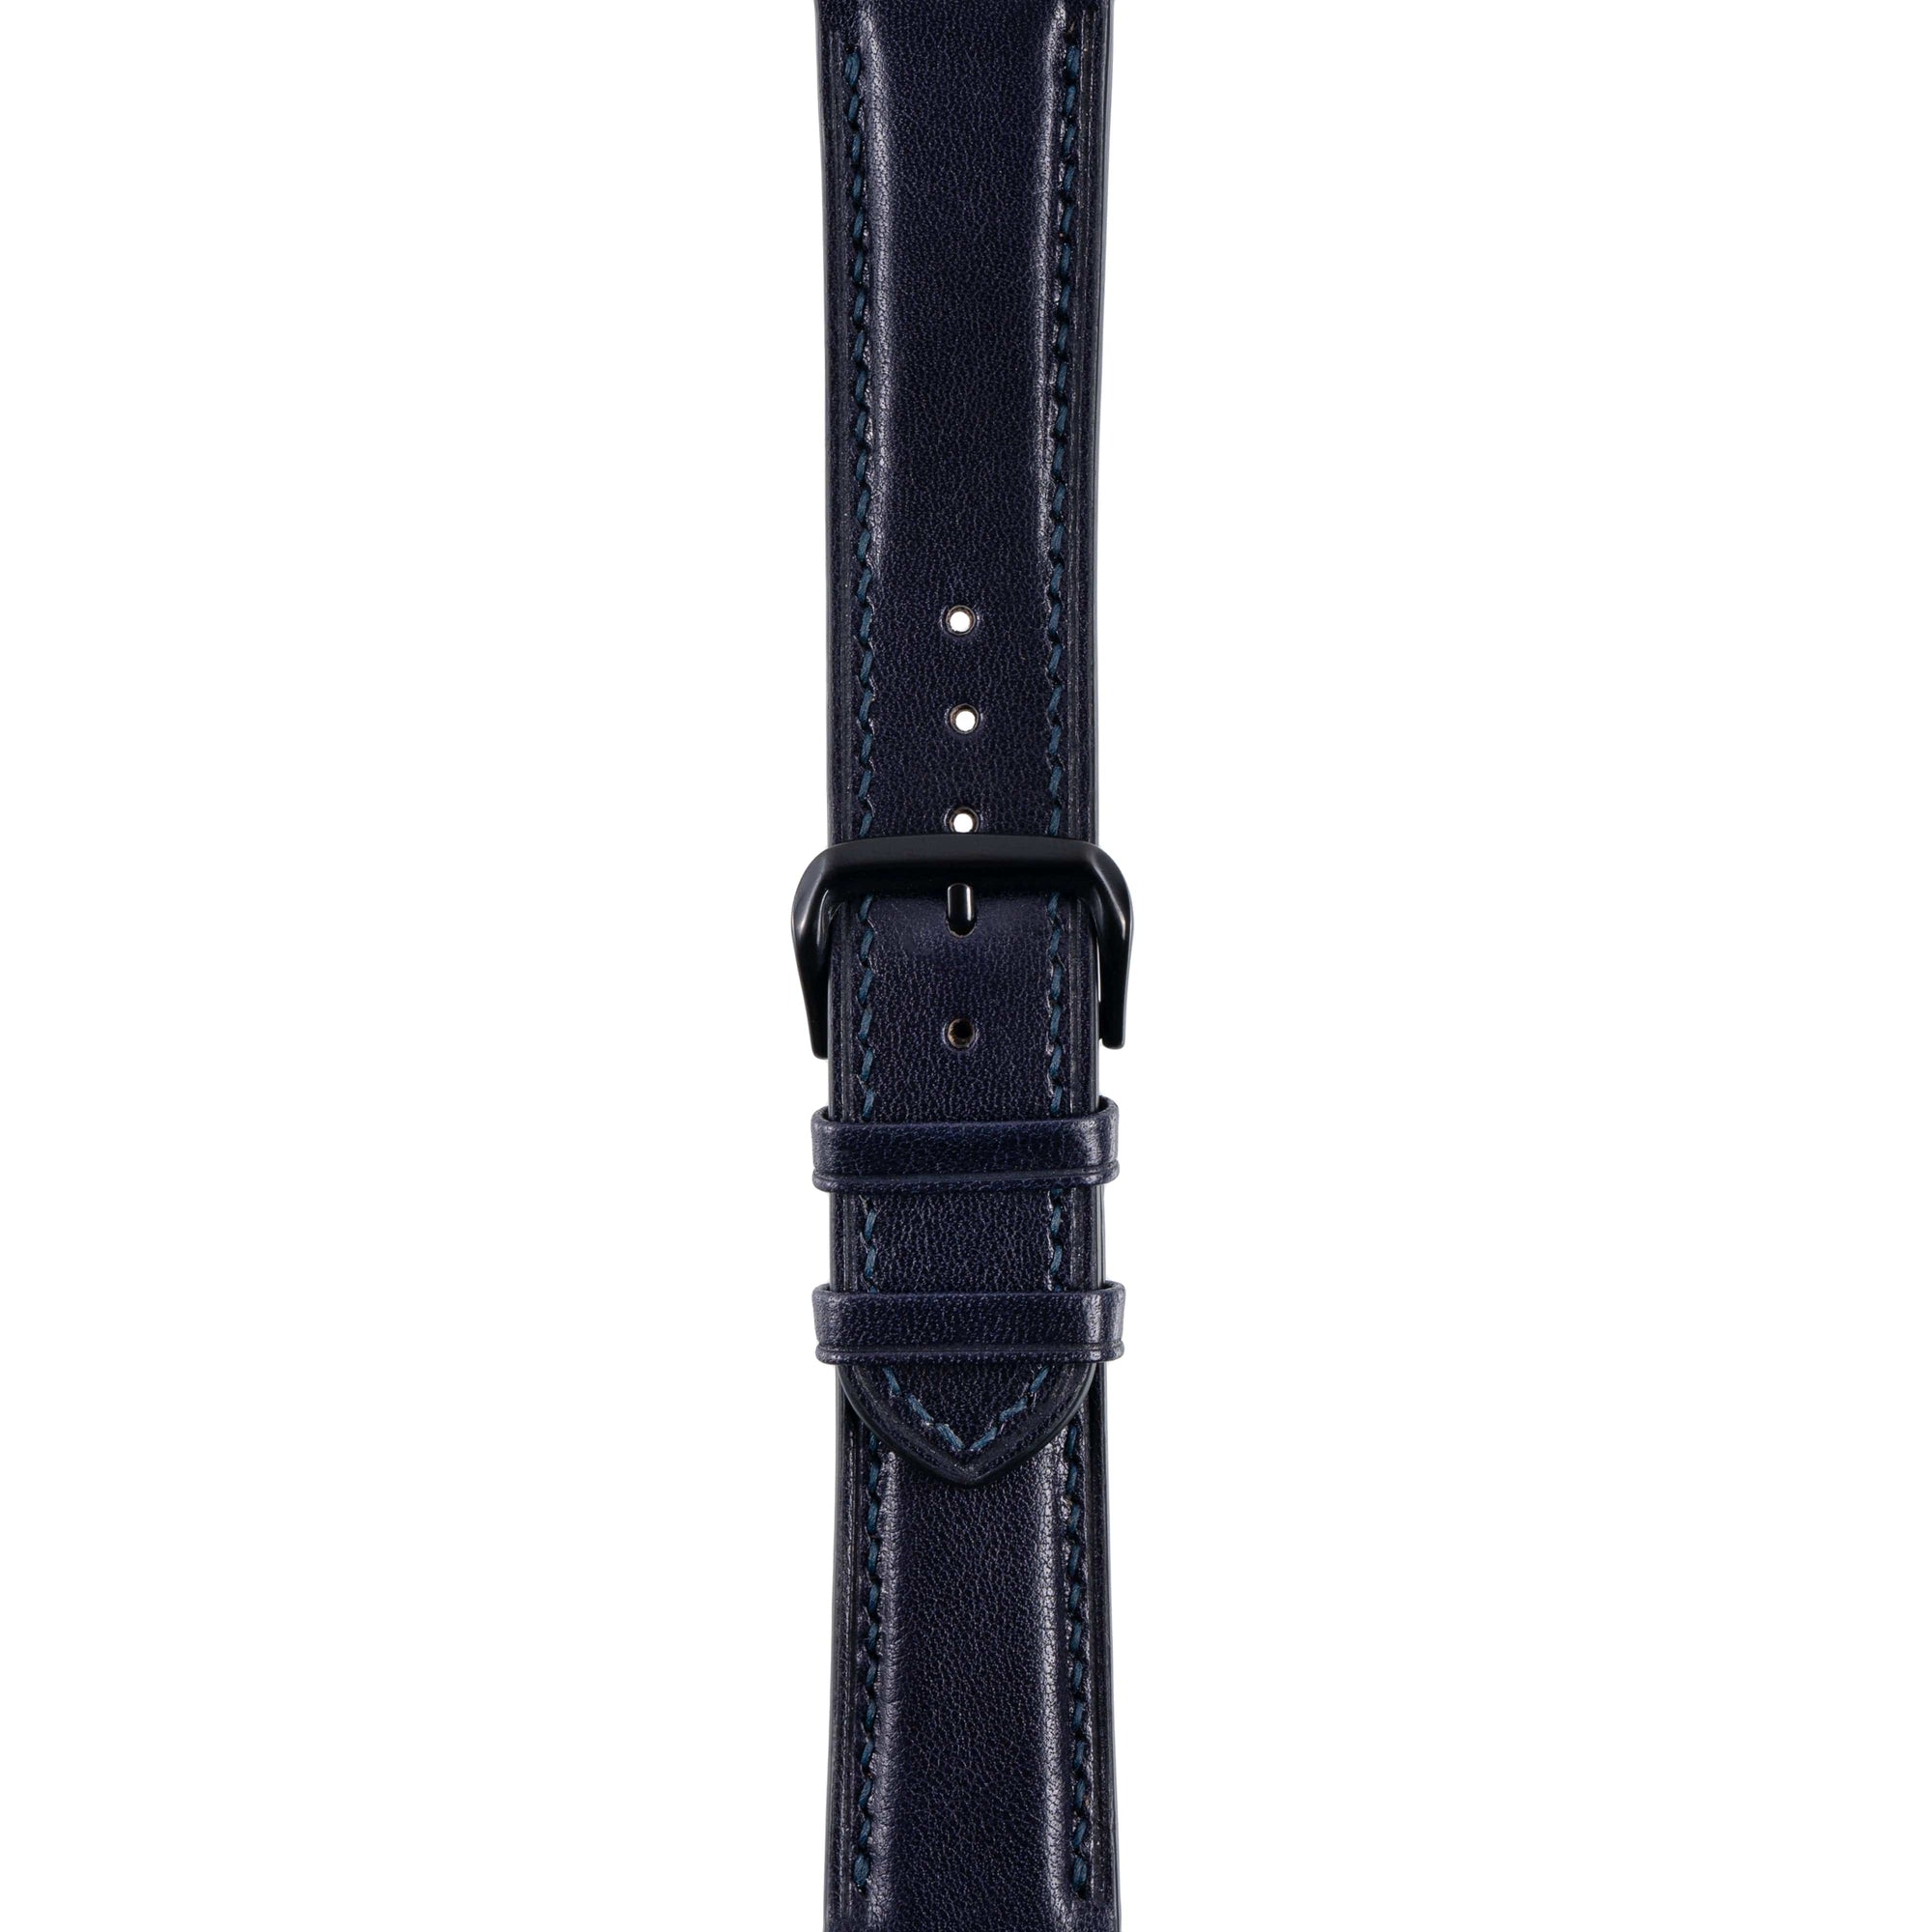 Vachetta Signature Leather Watch Bands For Apple Watch | Vachetta | Monetial